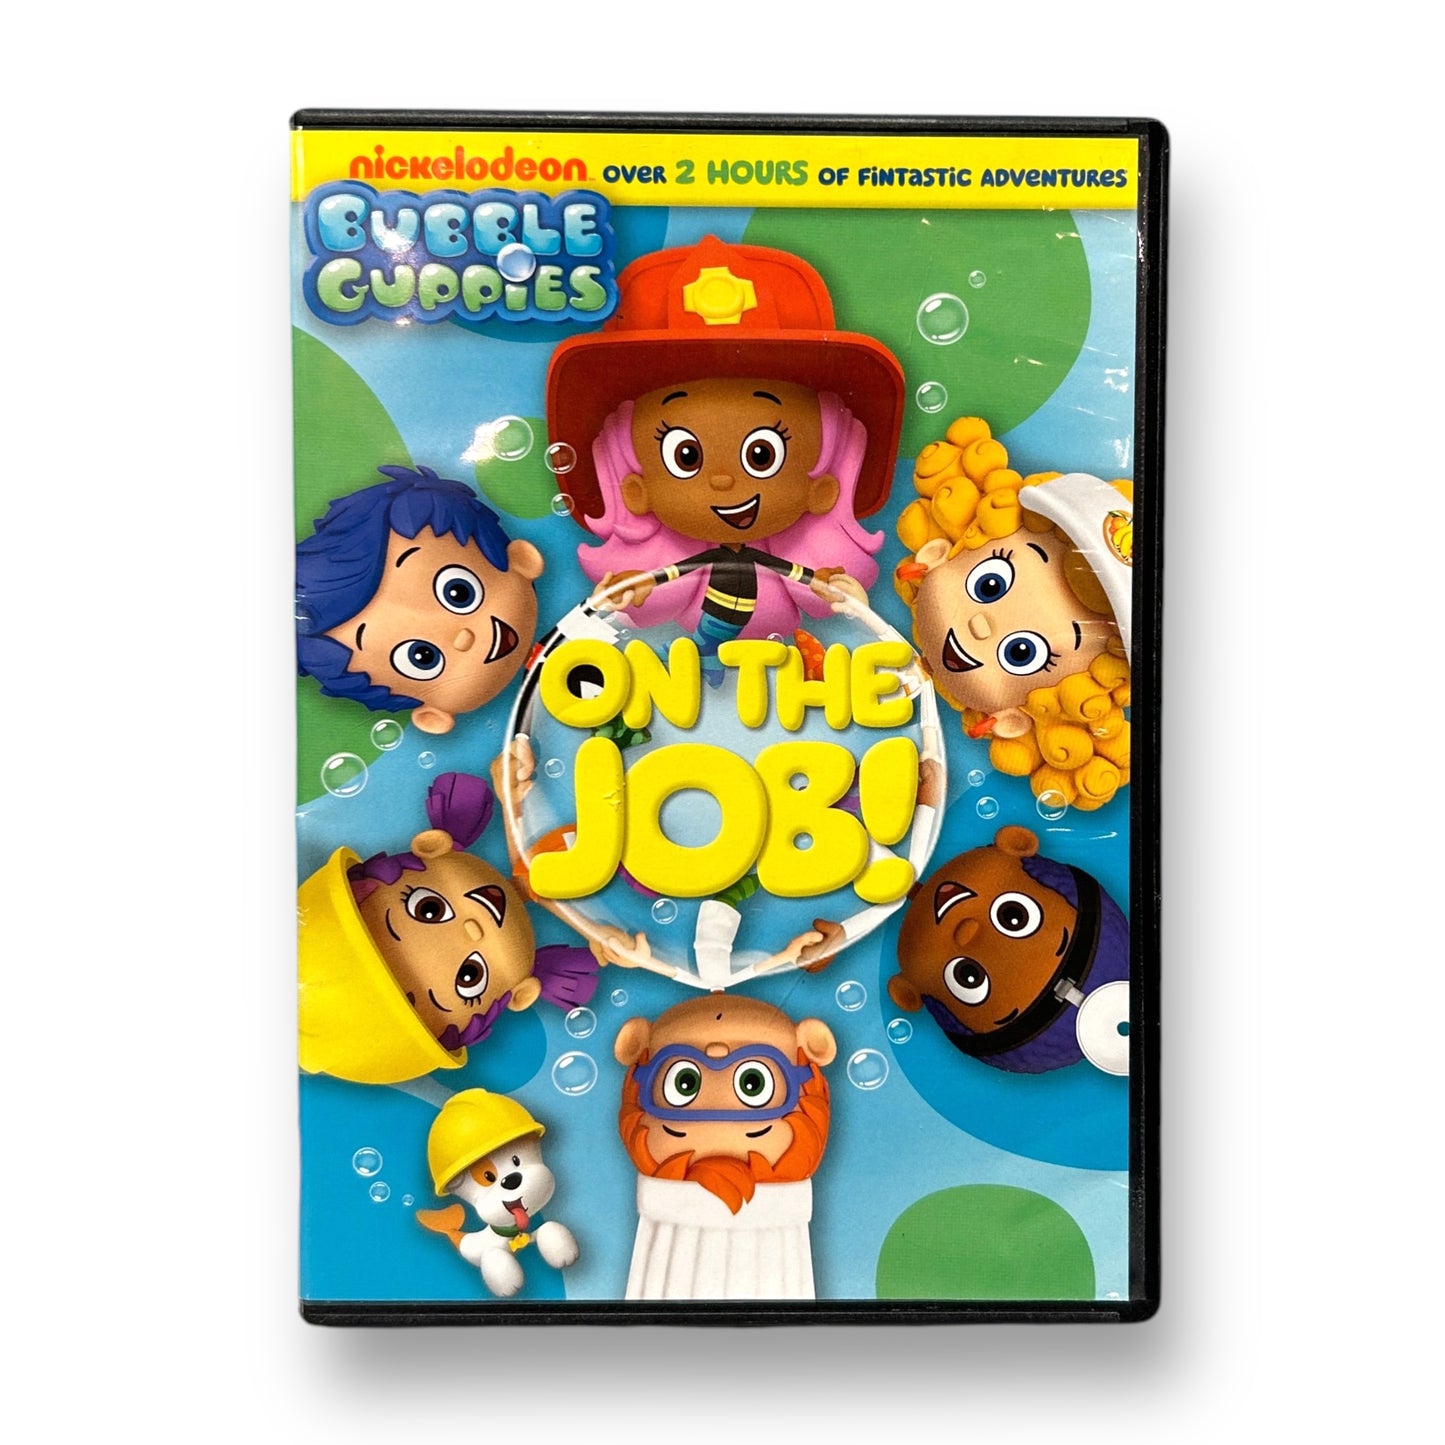 Bubble Guppies: On the Job! DVD